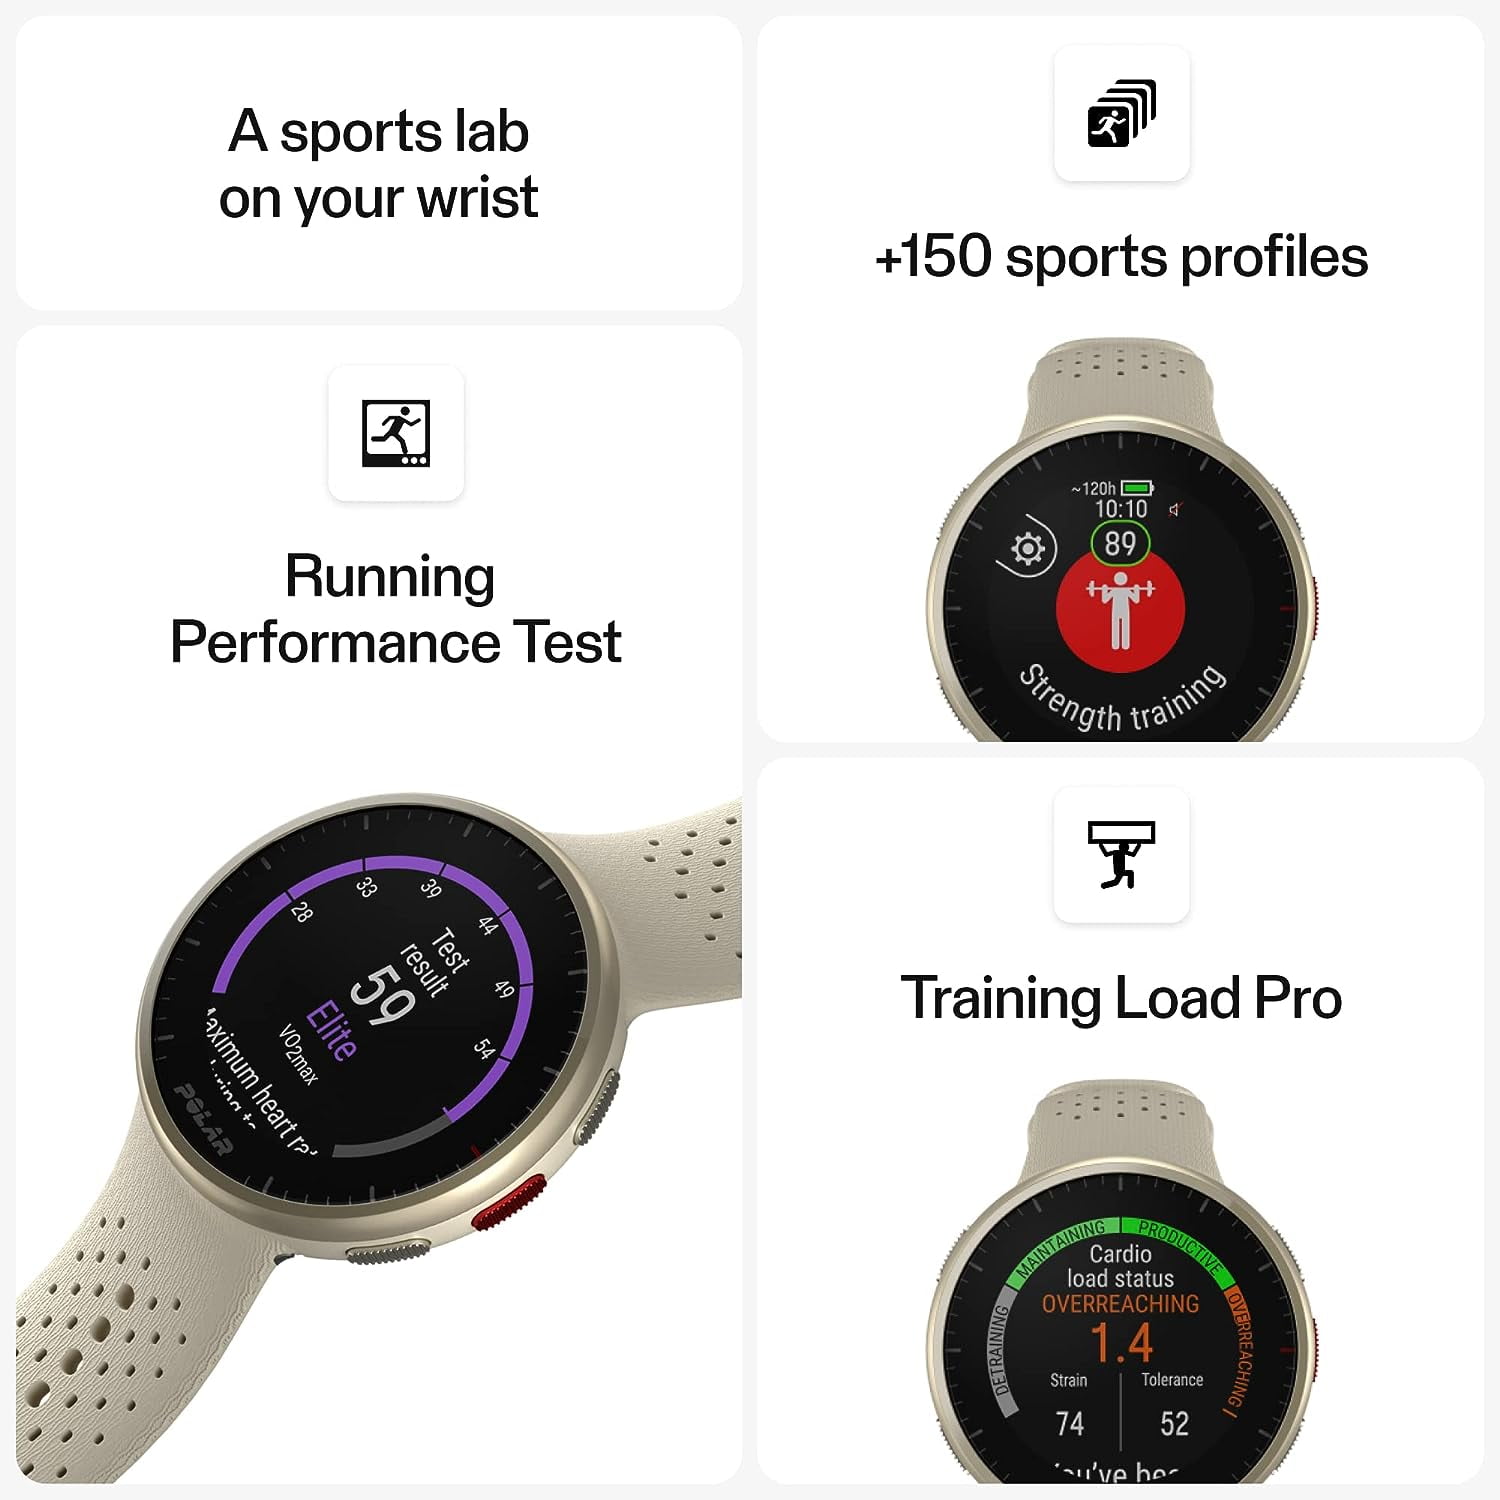 Polar Pacer Pro Advanced GPS Running Watch, Grey/Black 